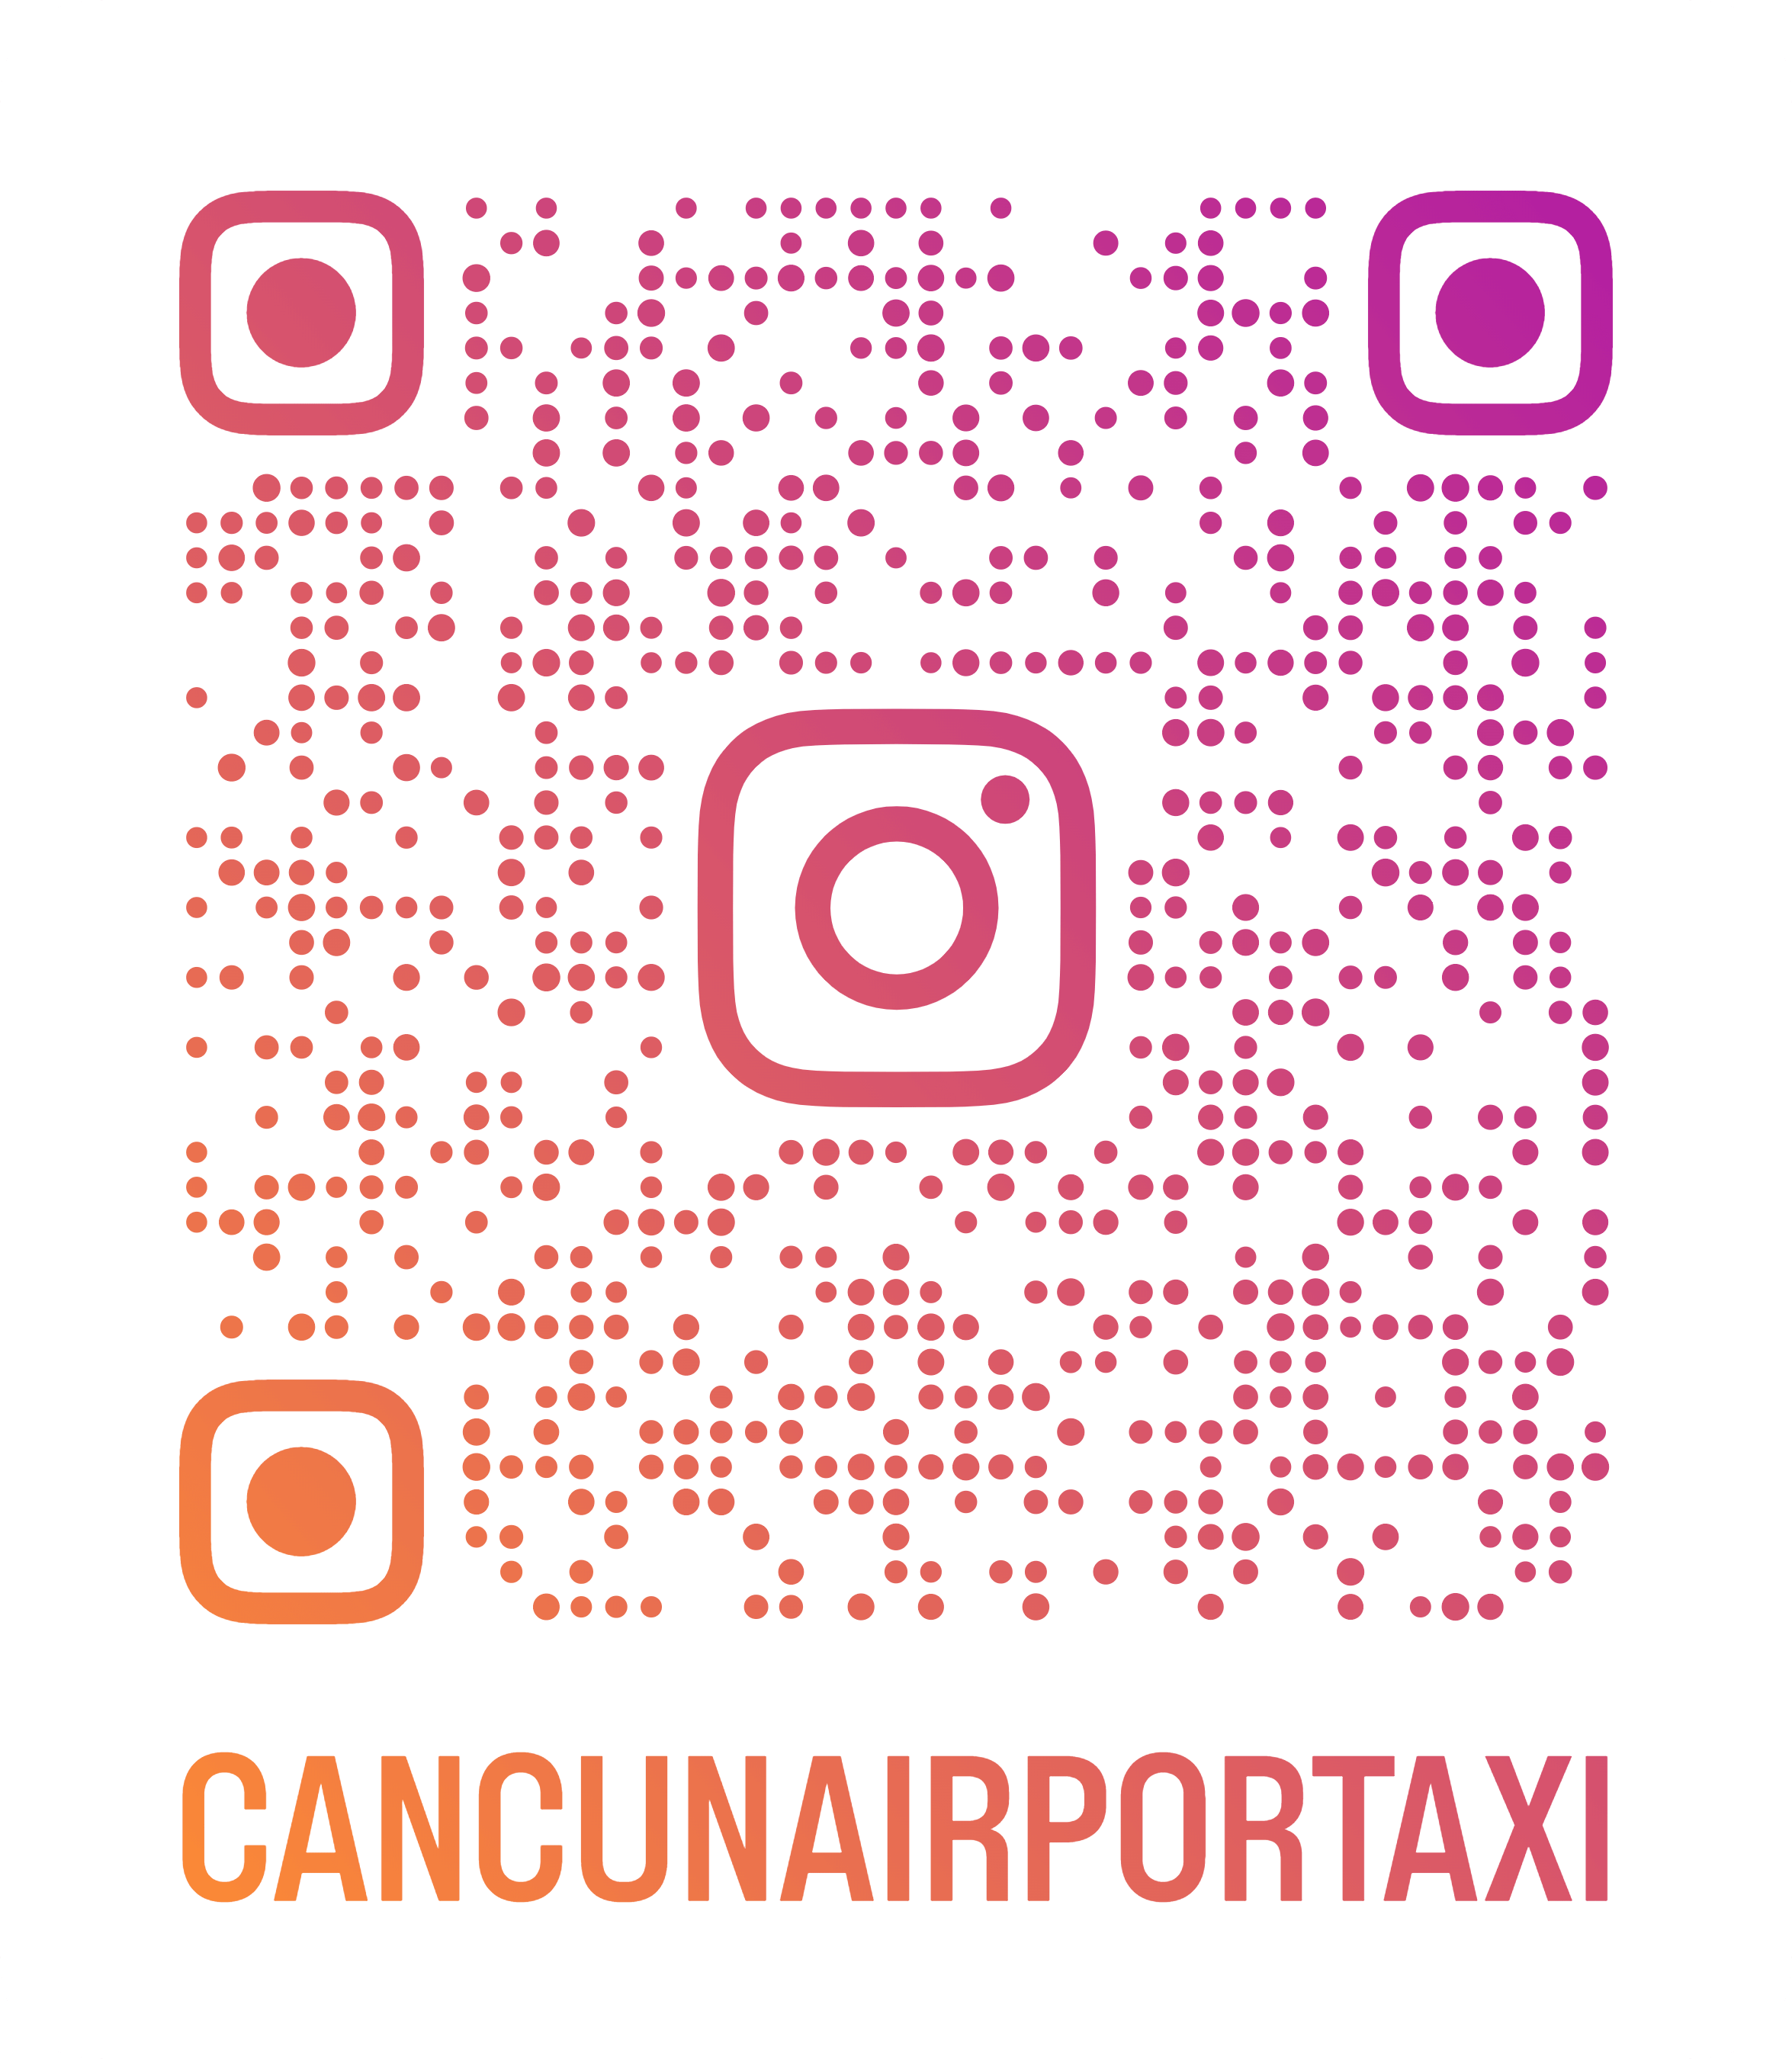 @cancunairportaxi